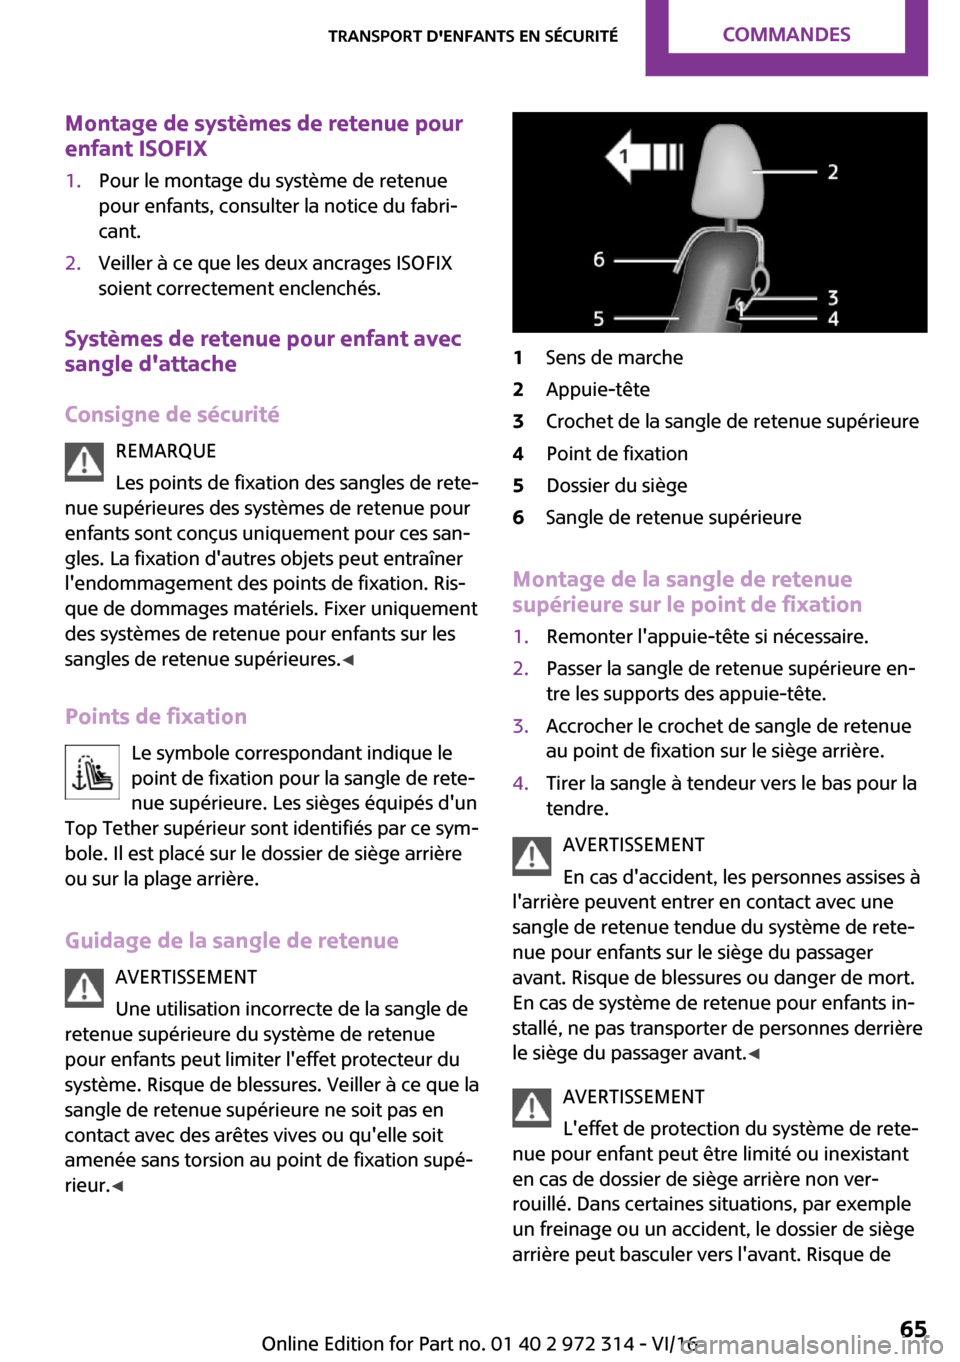 MINI 3 door 2016  Manuel du propriétaire (in French) �M�o�n�t�a�g�e��d�e��s�y�s�t�è�m�e�s��d�e��r�e�t�e�n�u�e��p�o�u�r
�e�n�f�a�n�t��I�S�O�F�I�X�1�.�P�o�u�r� �l�e� �m�o�n�t�a�g�e� �d�u� �s�y�s�t�è�m�e� �d�e� �r�e�t�e�n�u�e
�p�o�u�r� �e�n�f�a�n�t